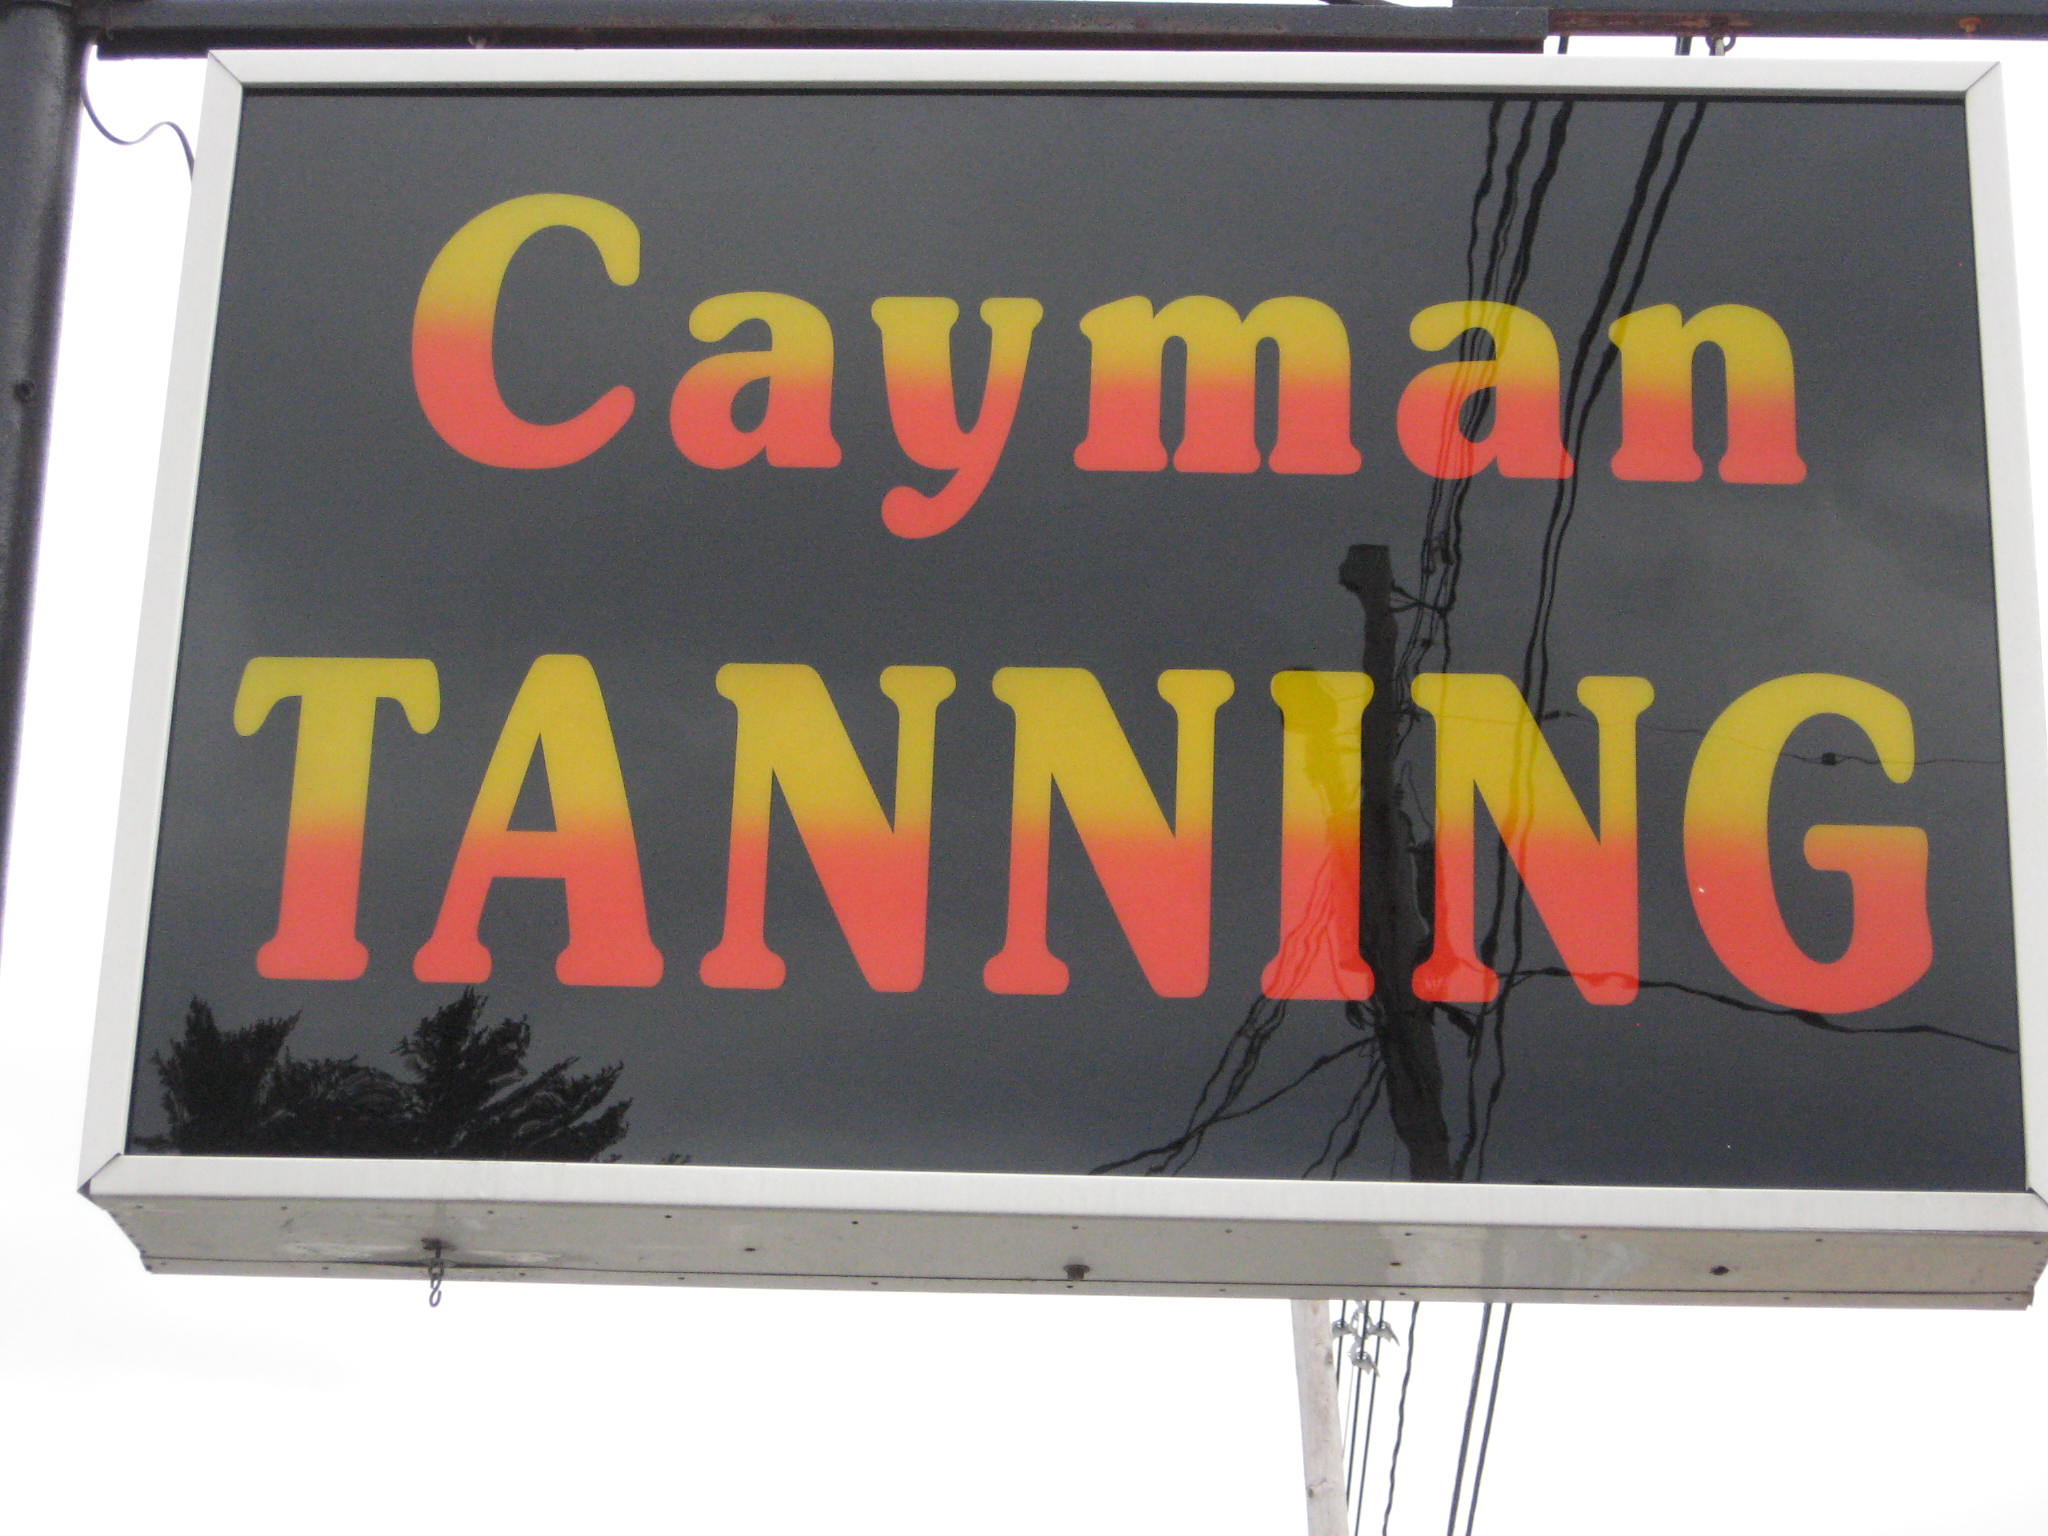 cayman tanning - p2.jpg